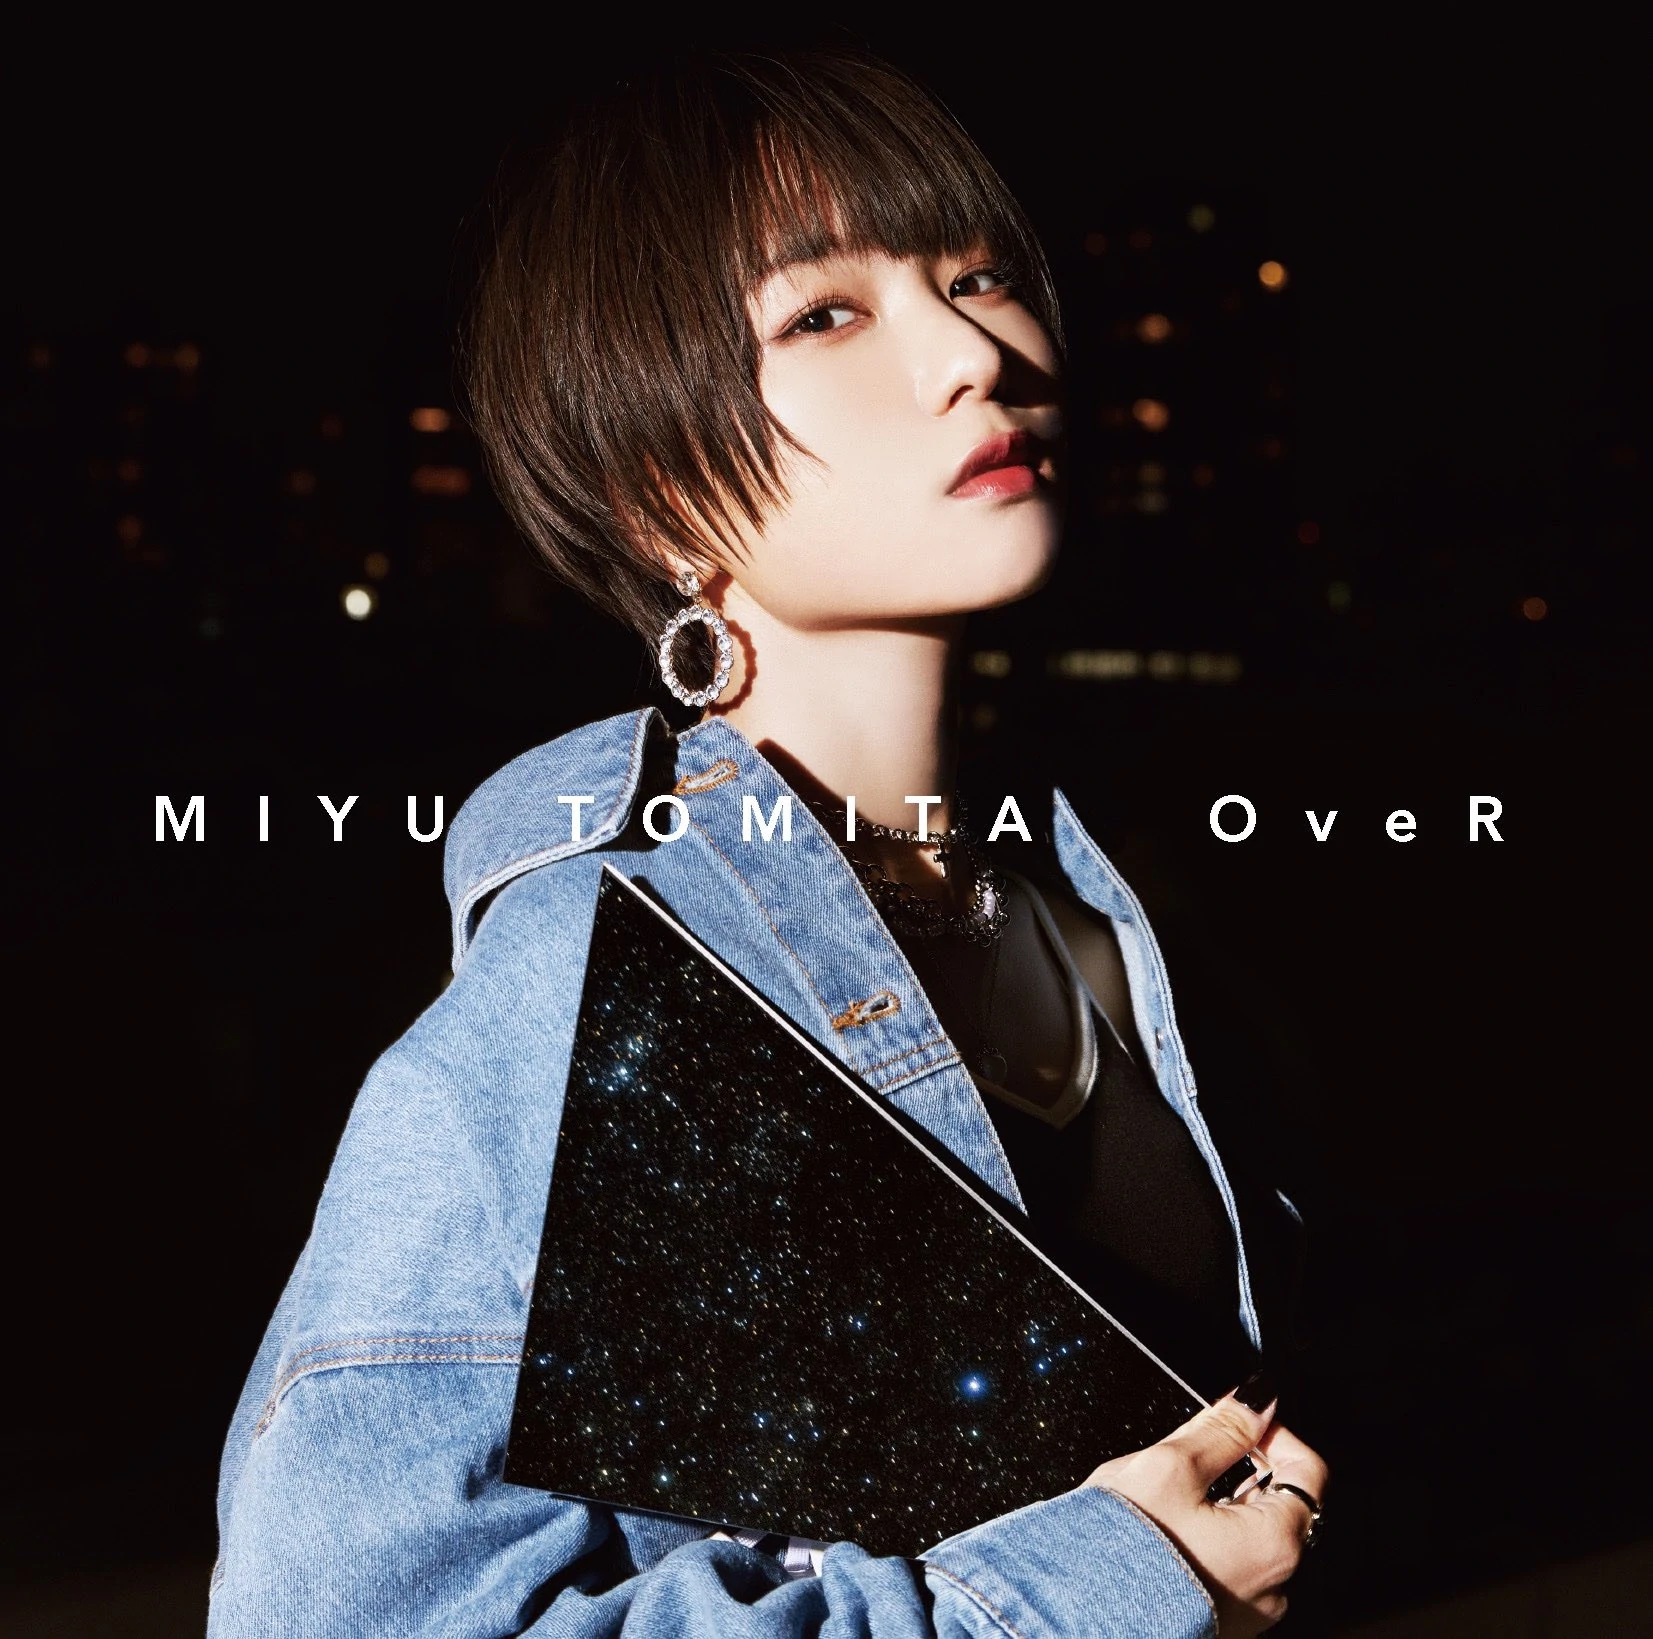 Date a Live Season 4 Opening Full『OveR』by Miyu Tomita 